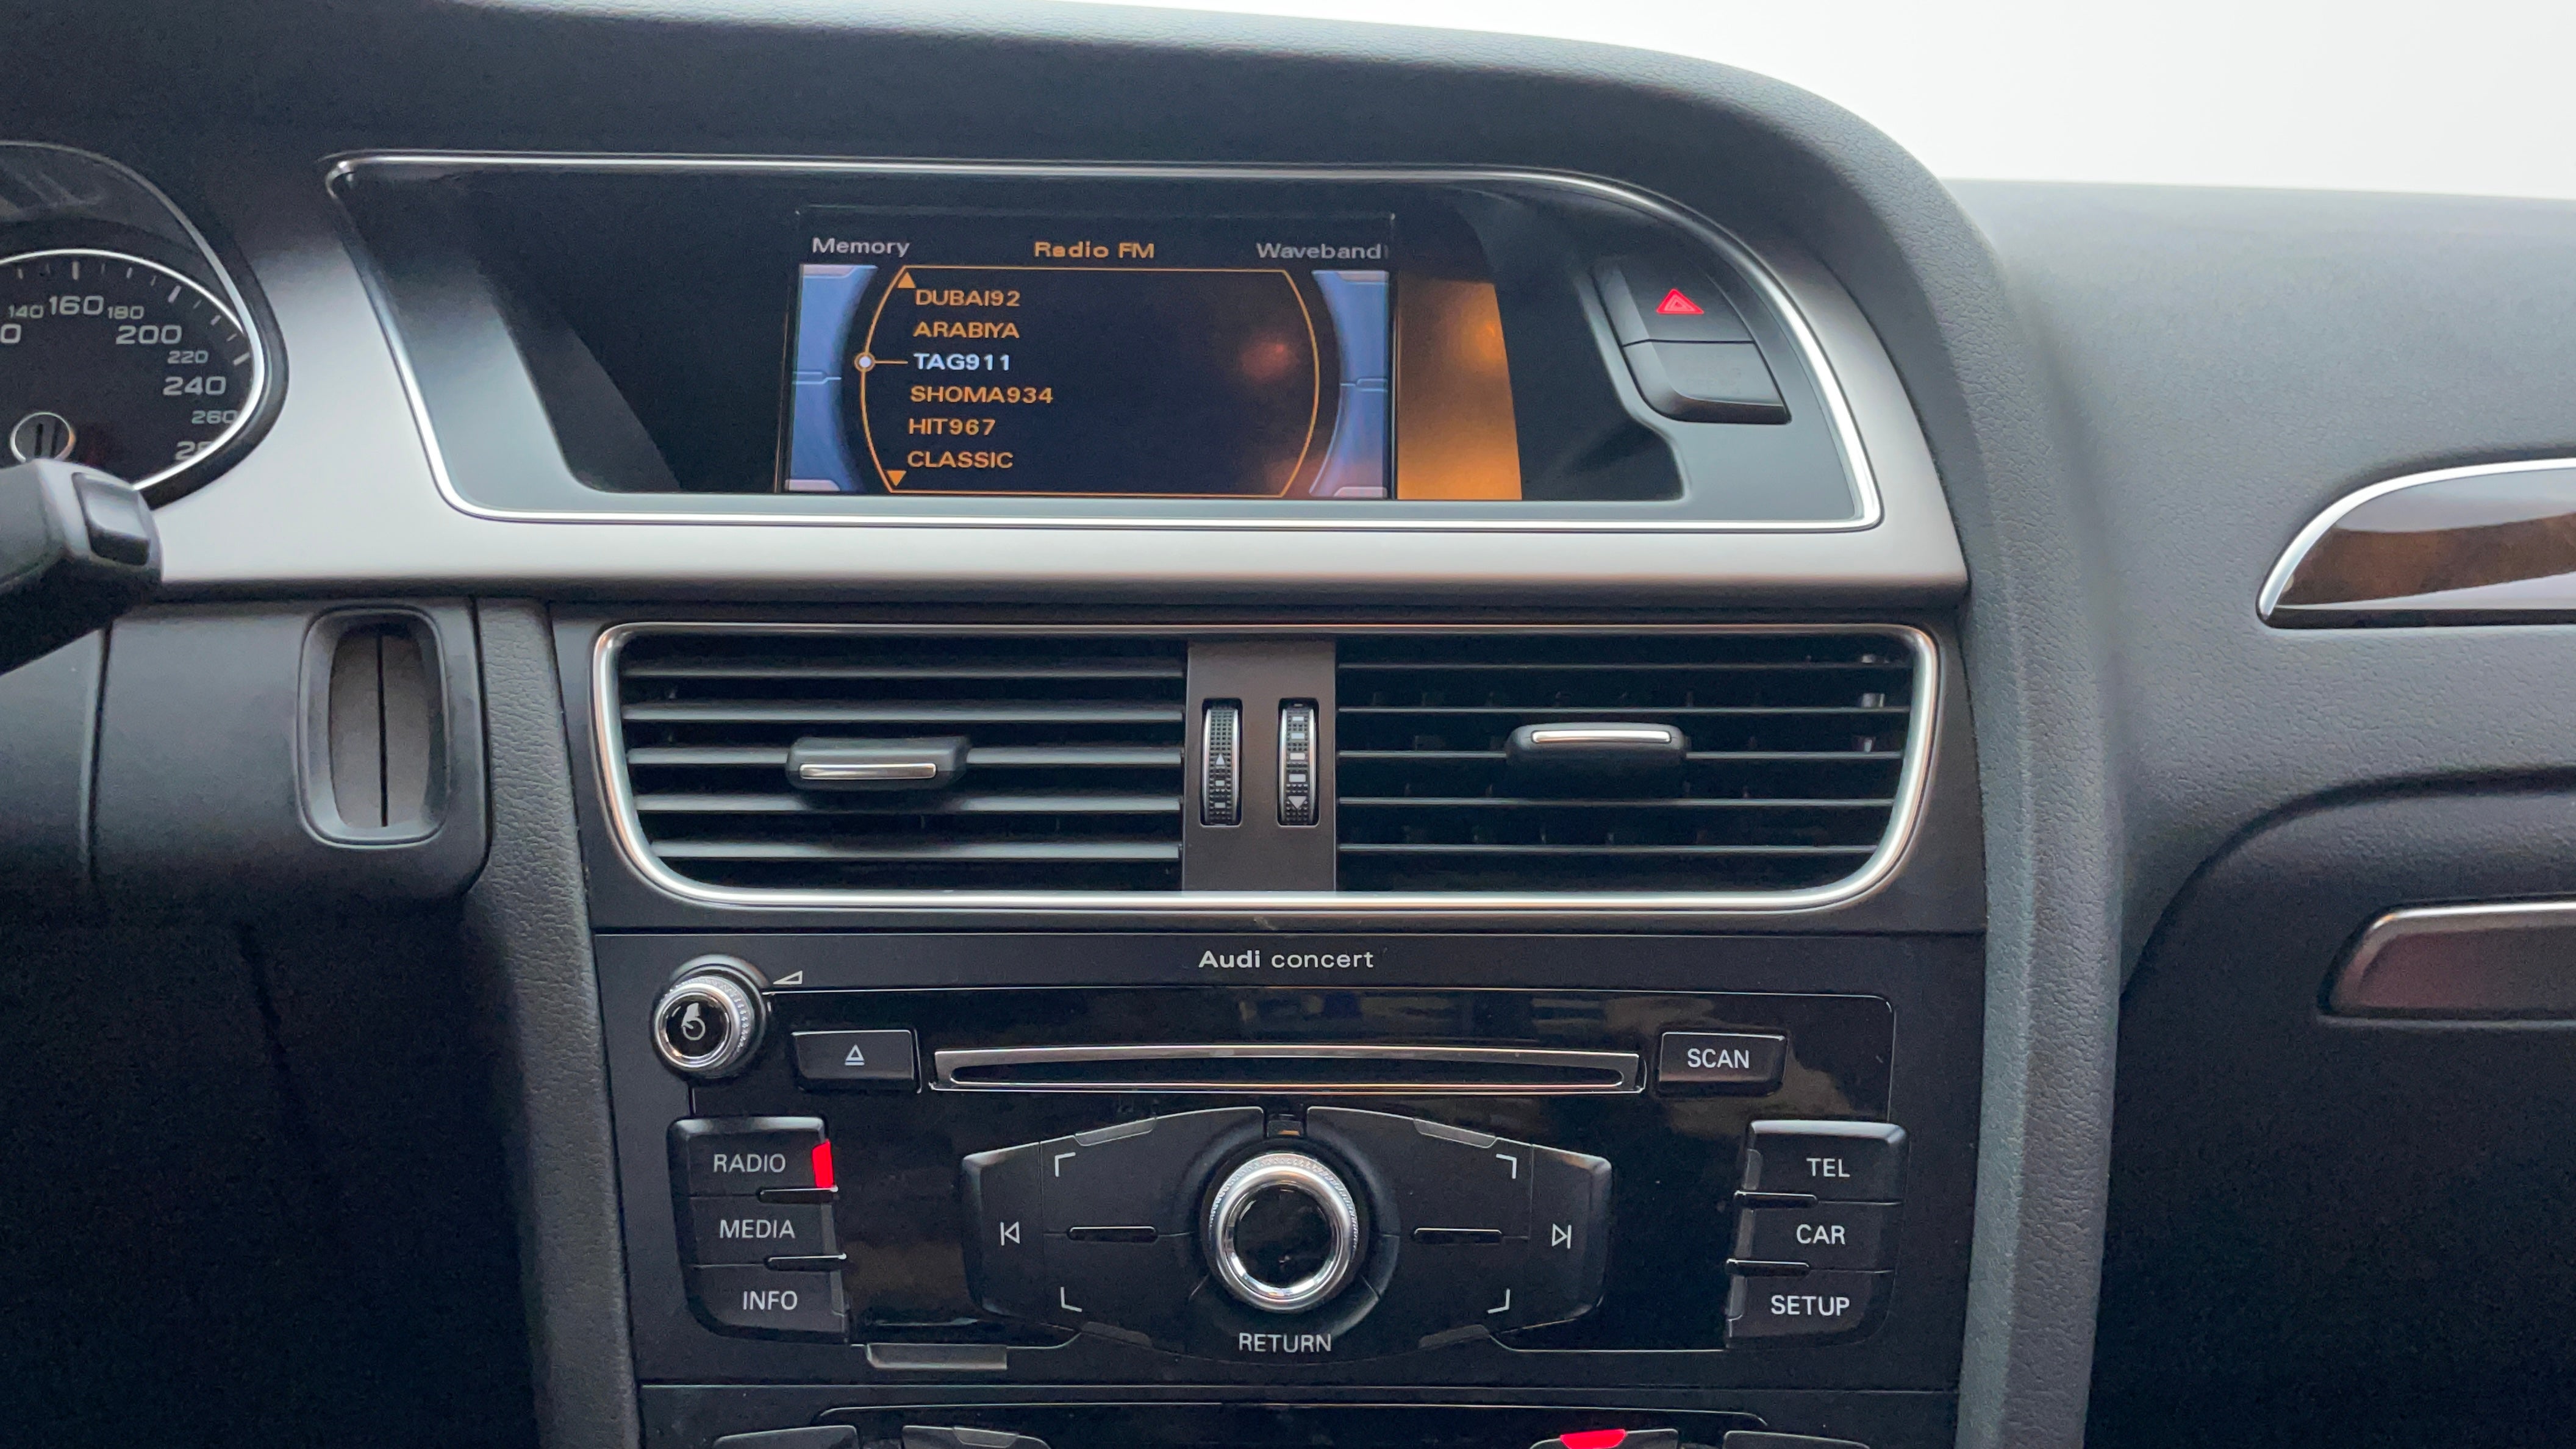 Audi A4-Infotainment System